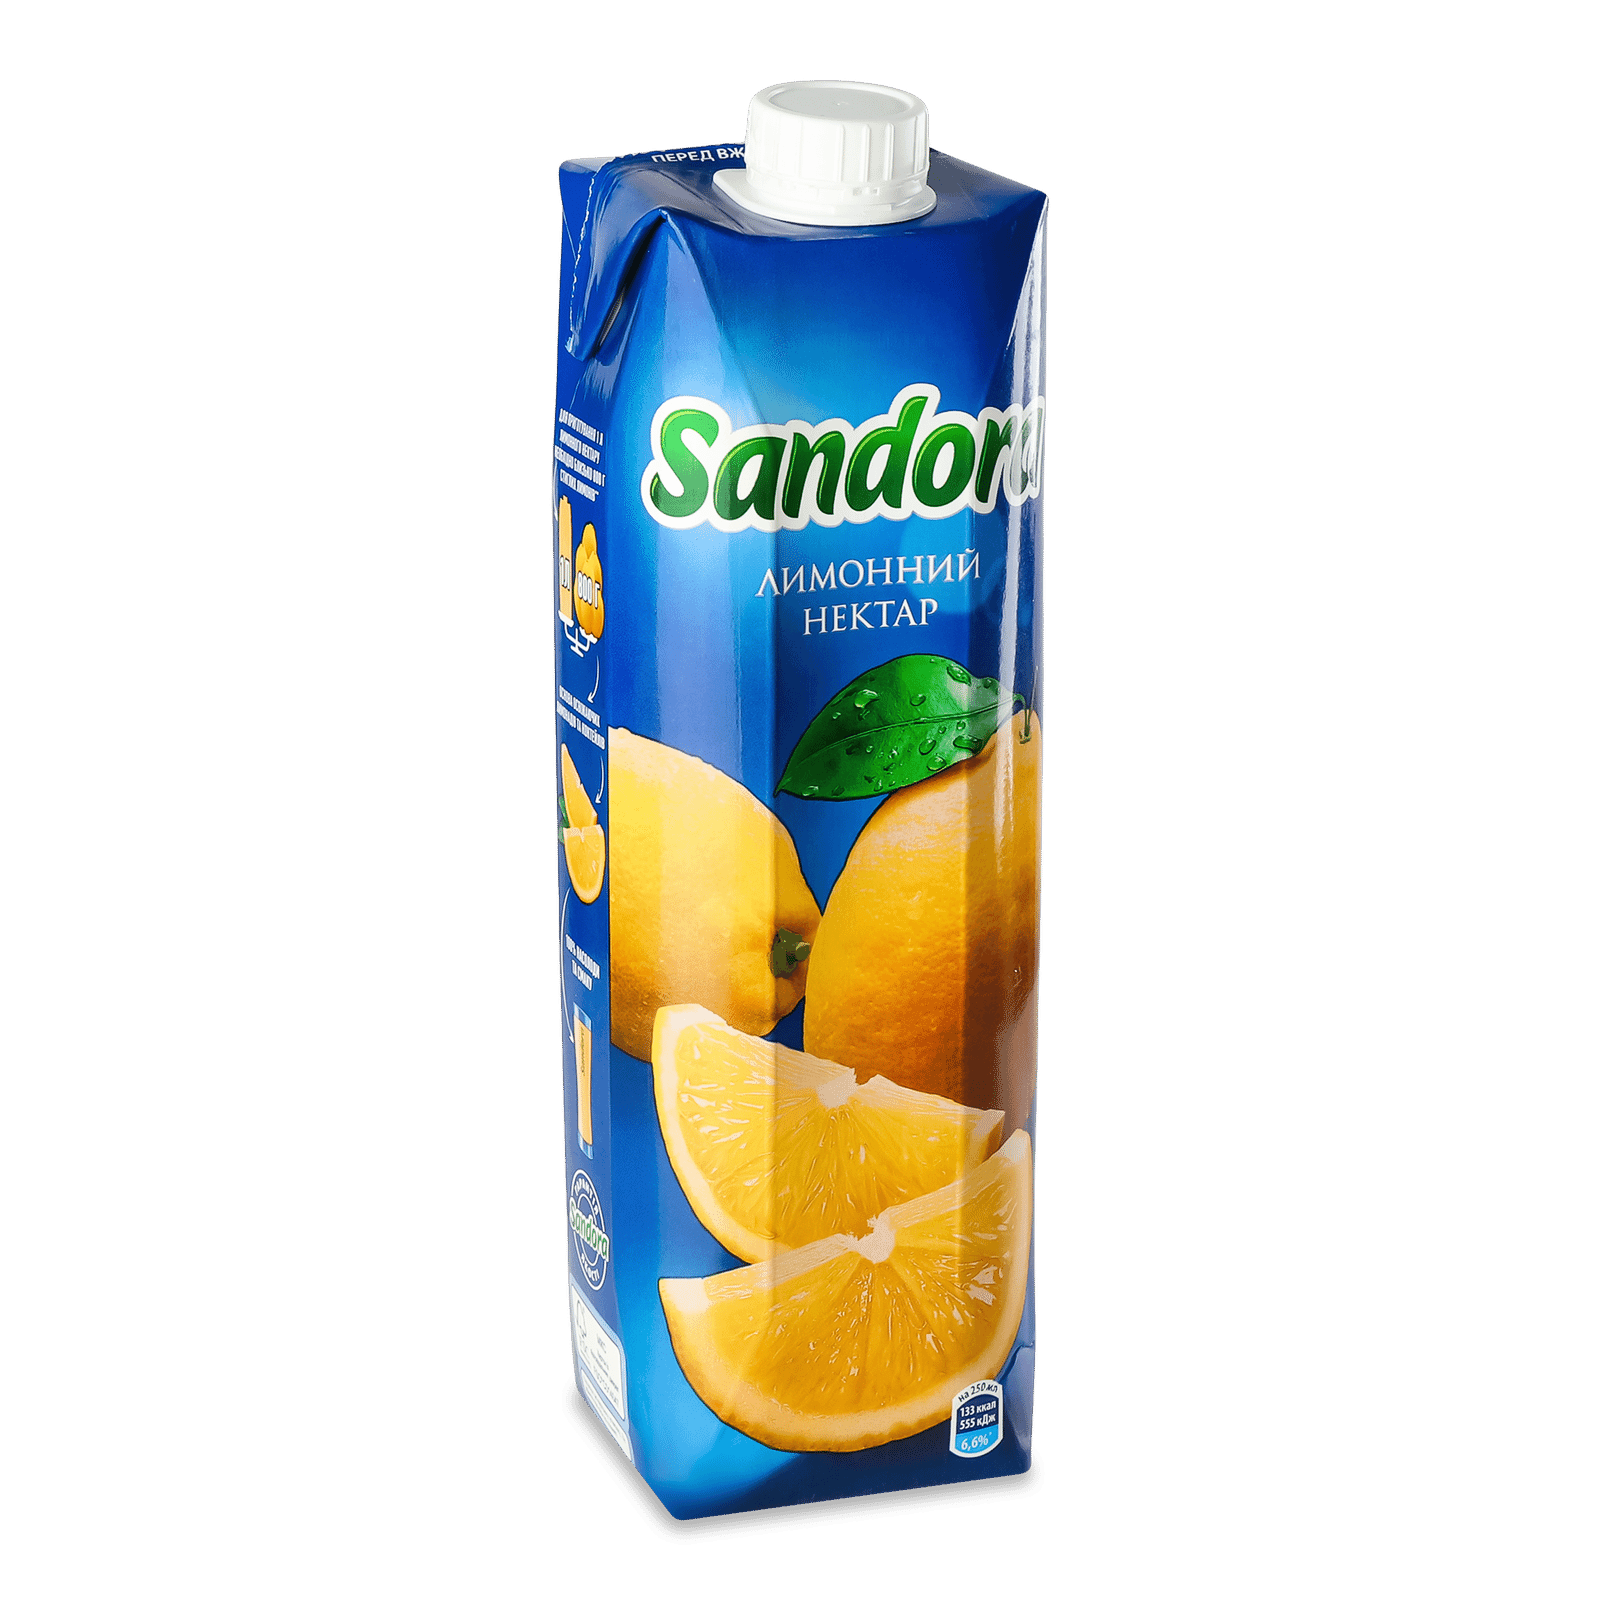 Нектар Sandora лимонний - 1